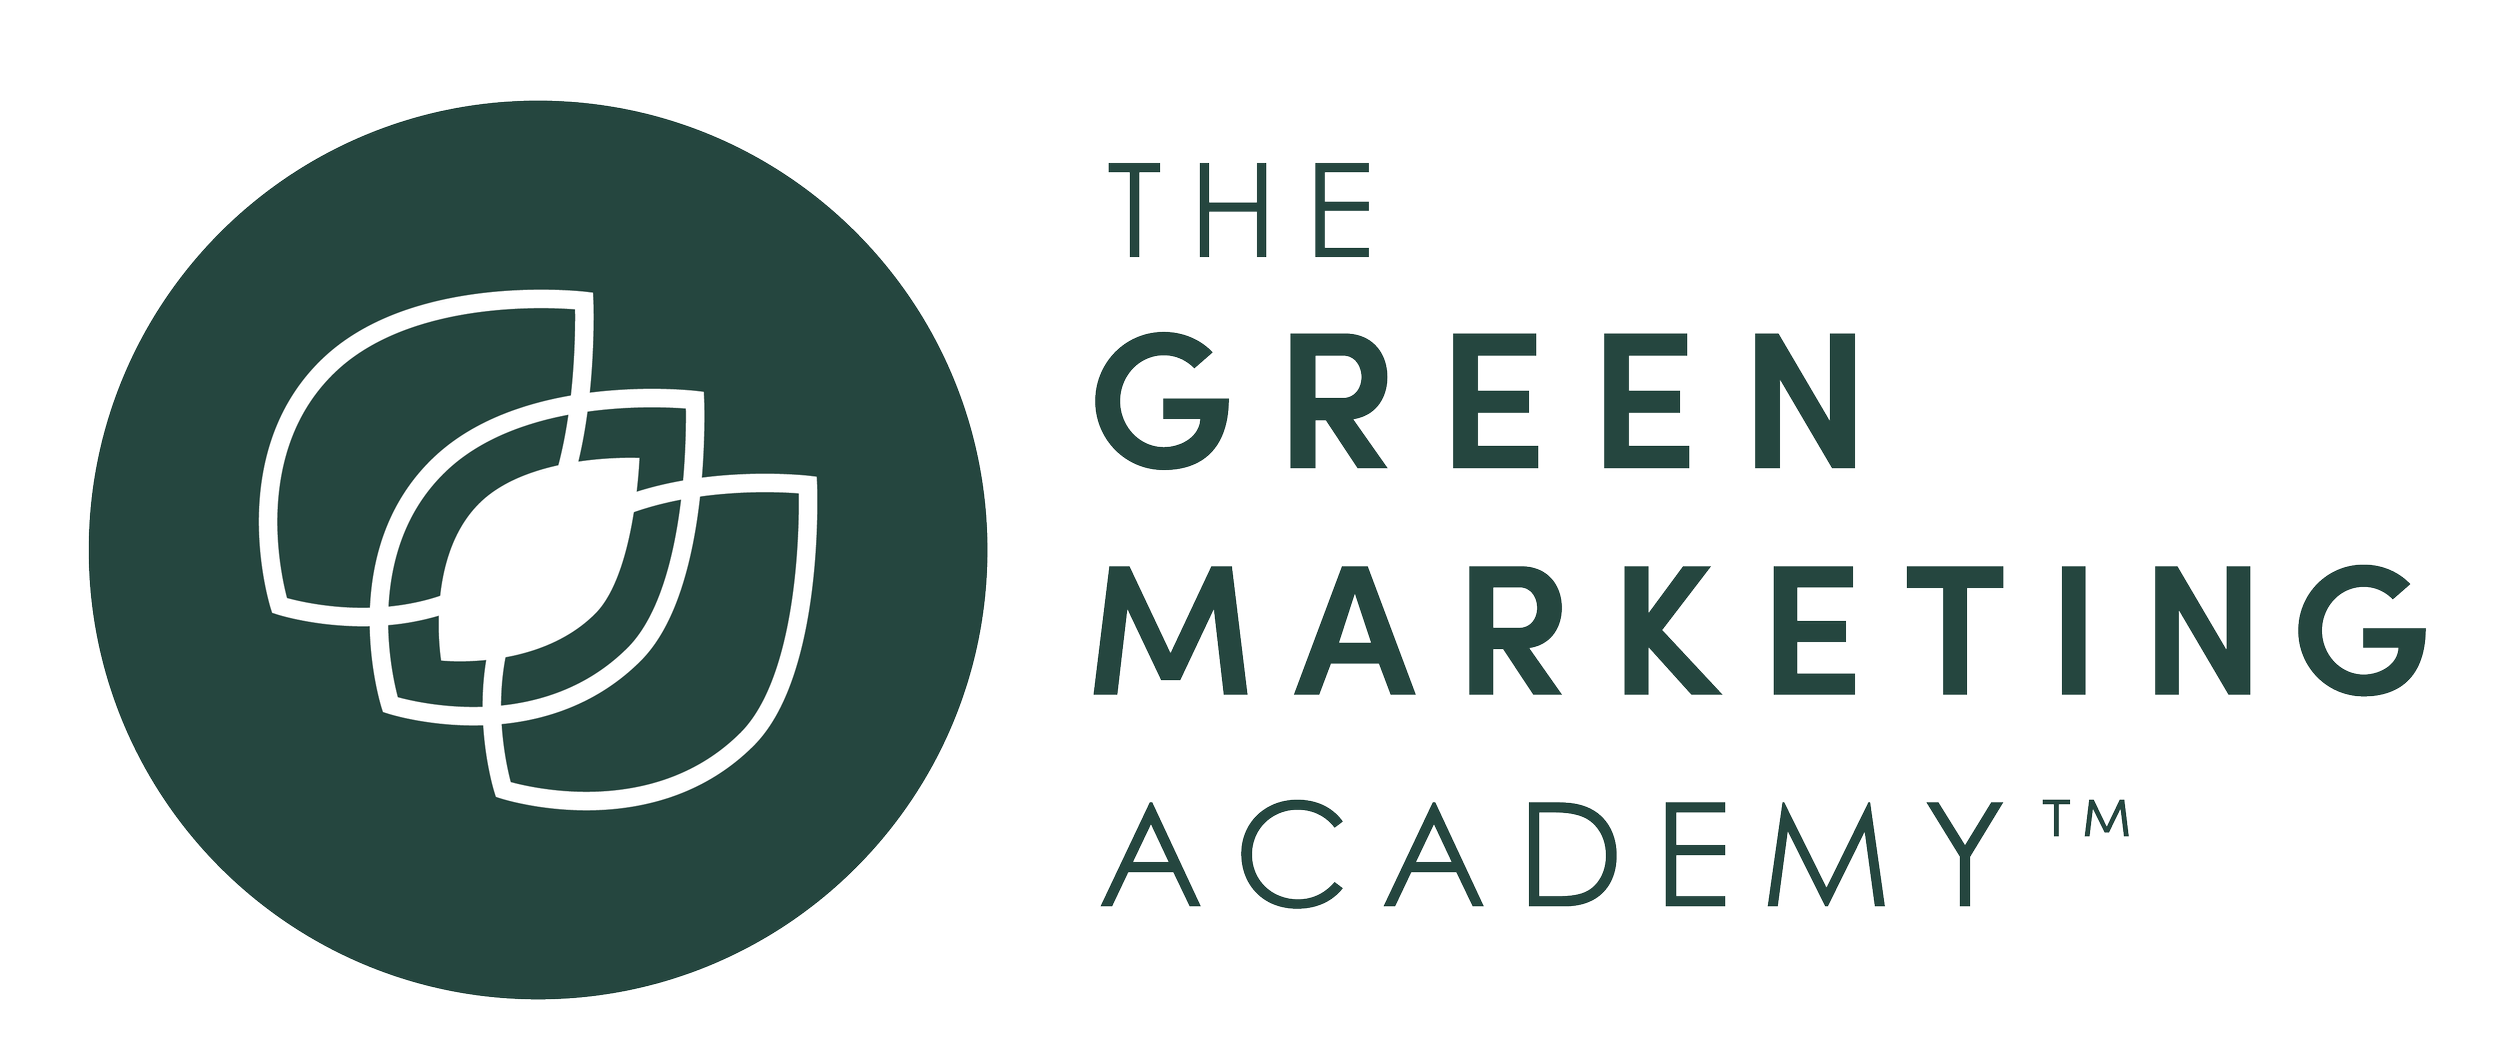 The Green Marketing Academy